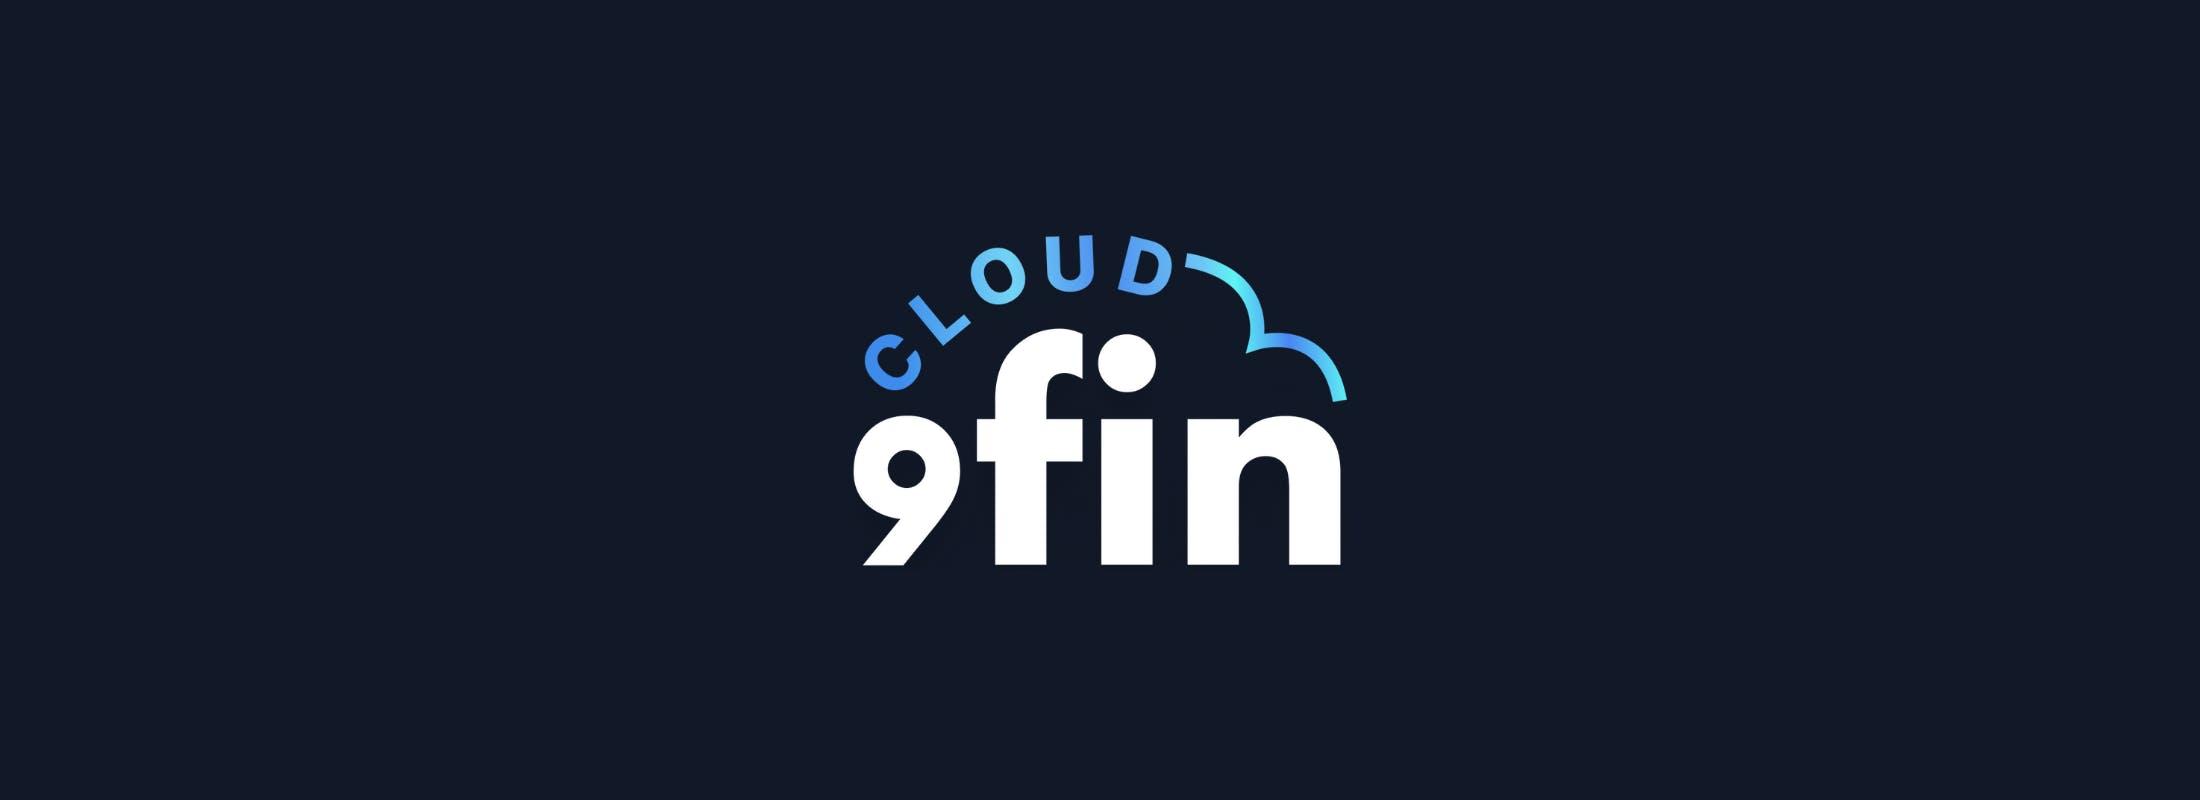 Cloud 9fin — SBTi U-turn rocks world of sustainable finance